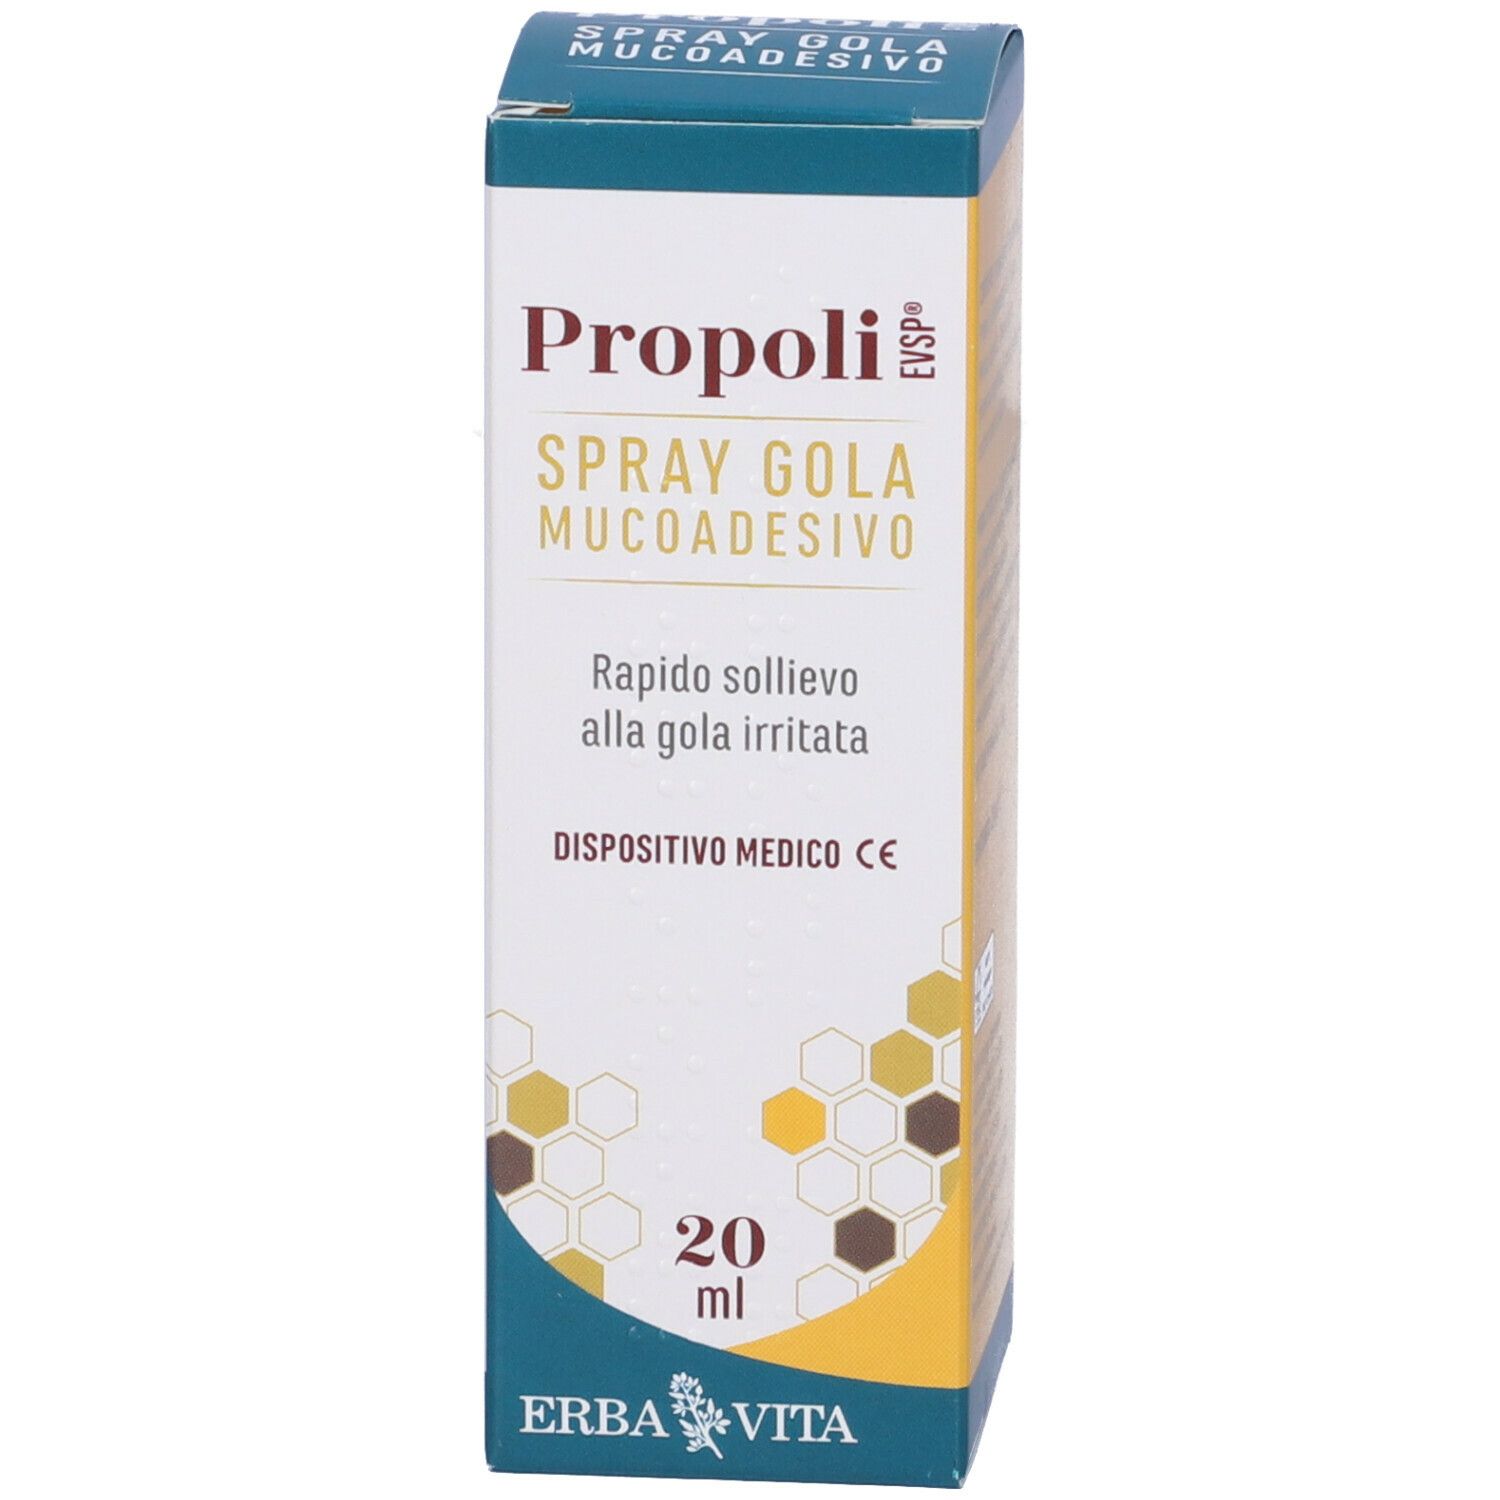 ERBA VITA Propoli EVSP® Spray Gola Mucoadesivo